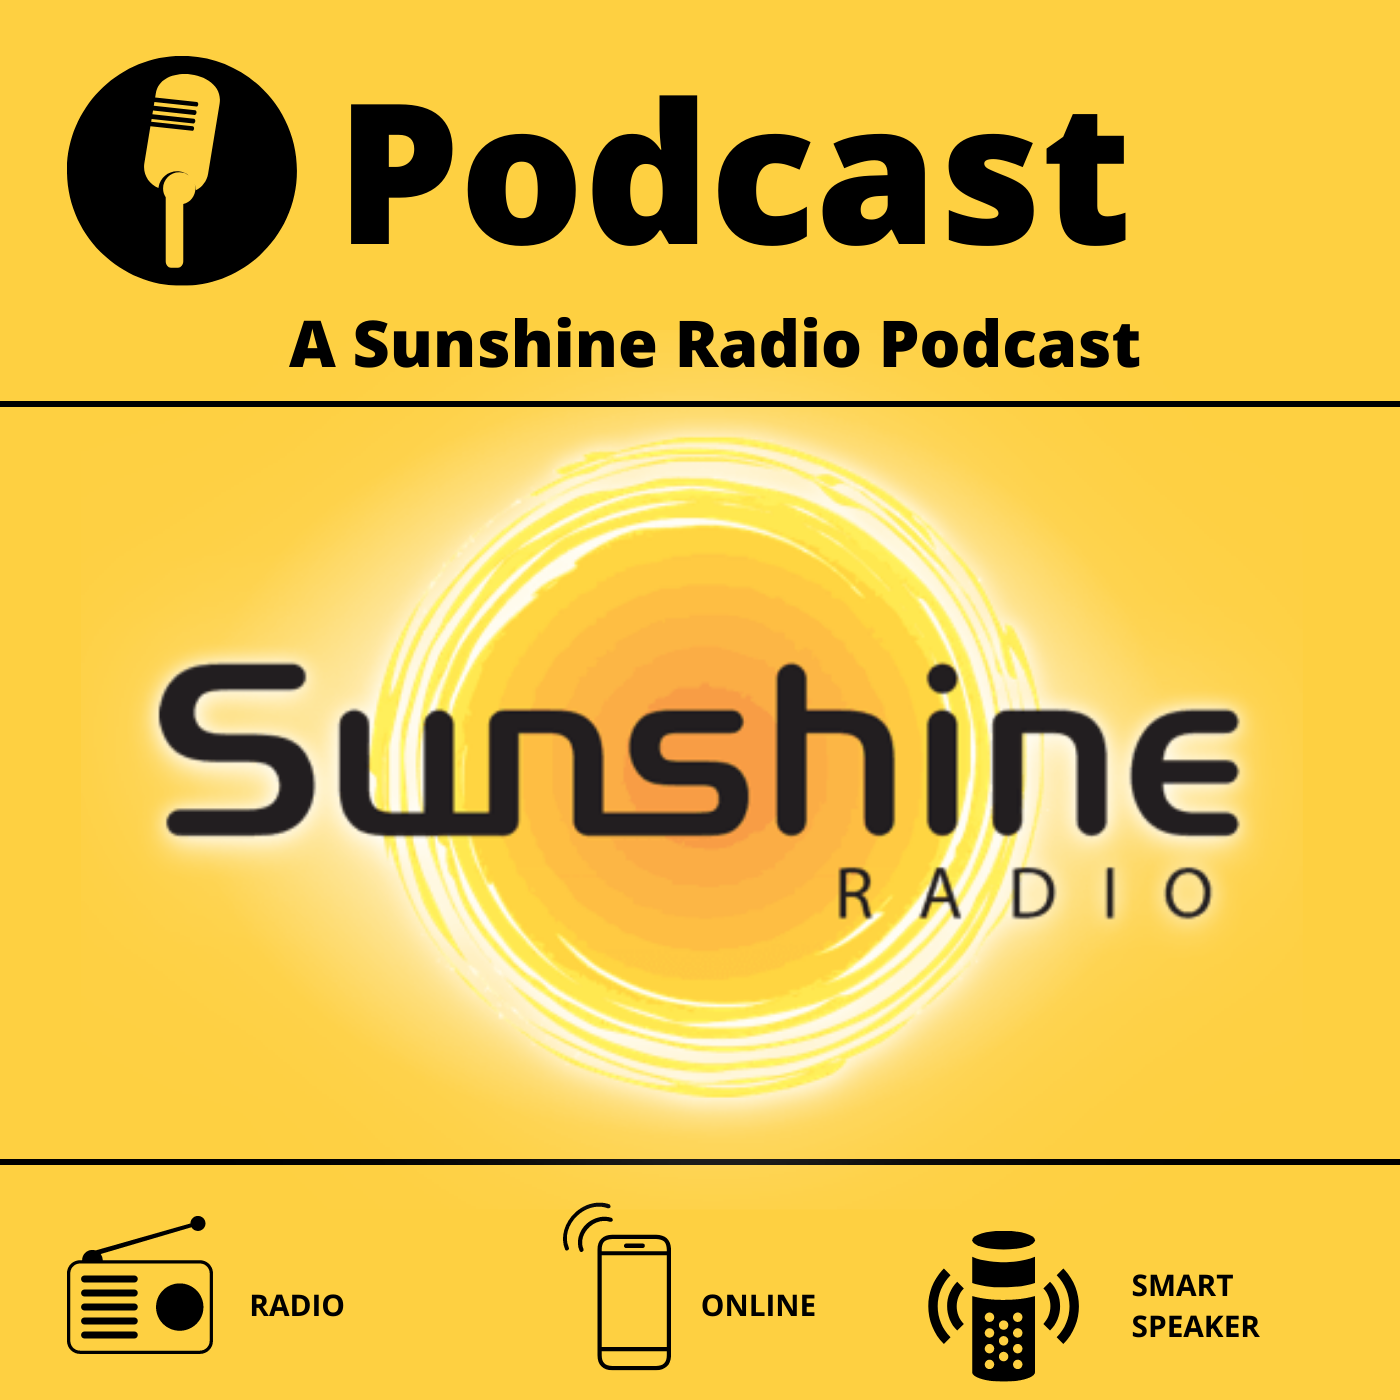 A Sunshine Radio Podcast